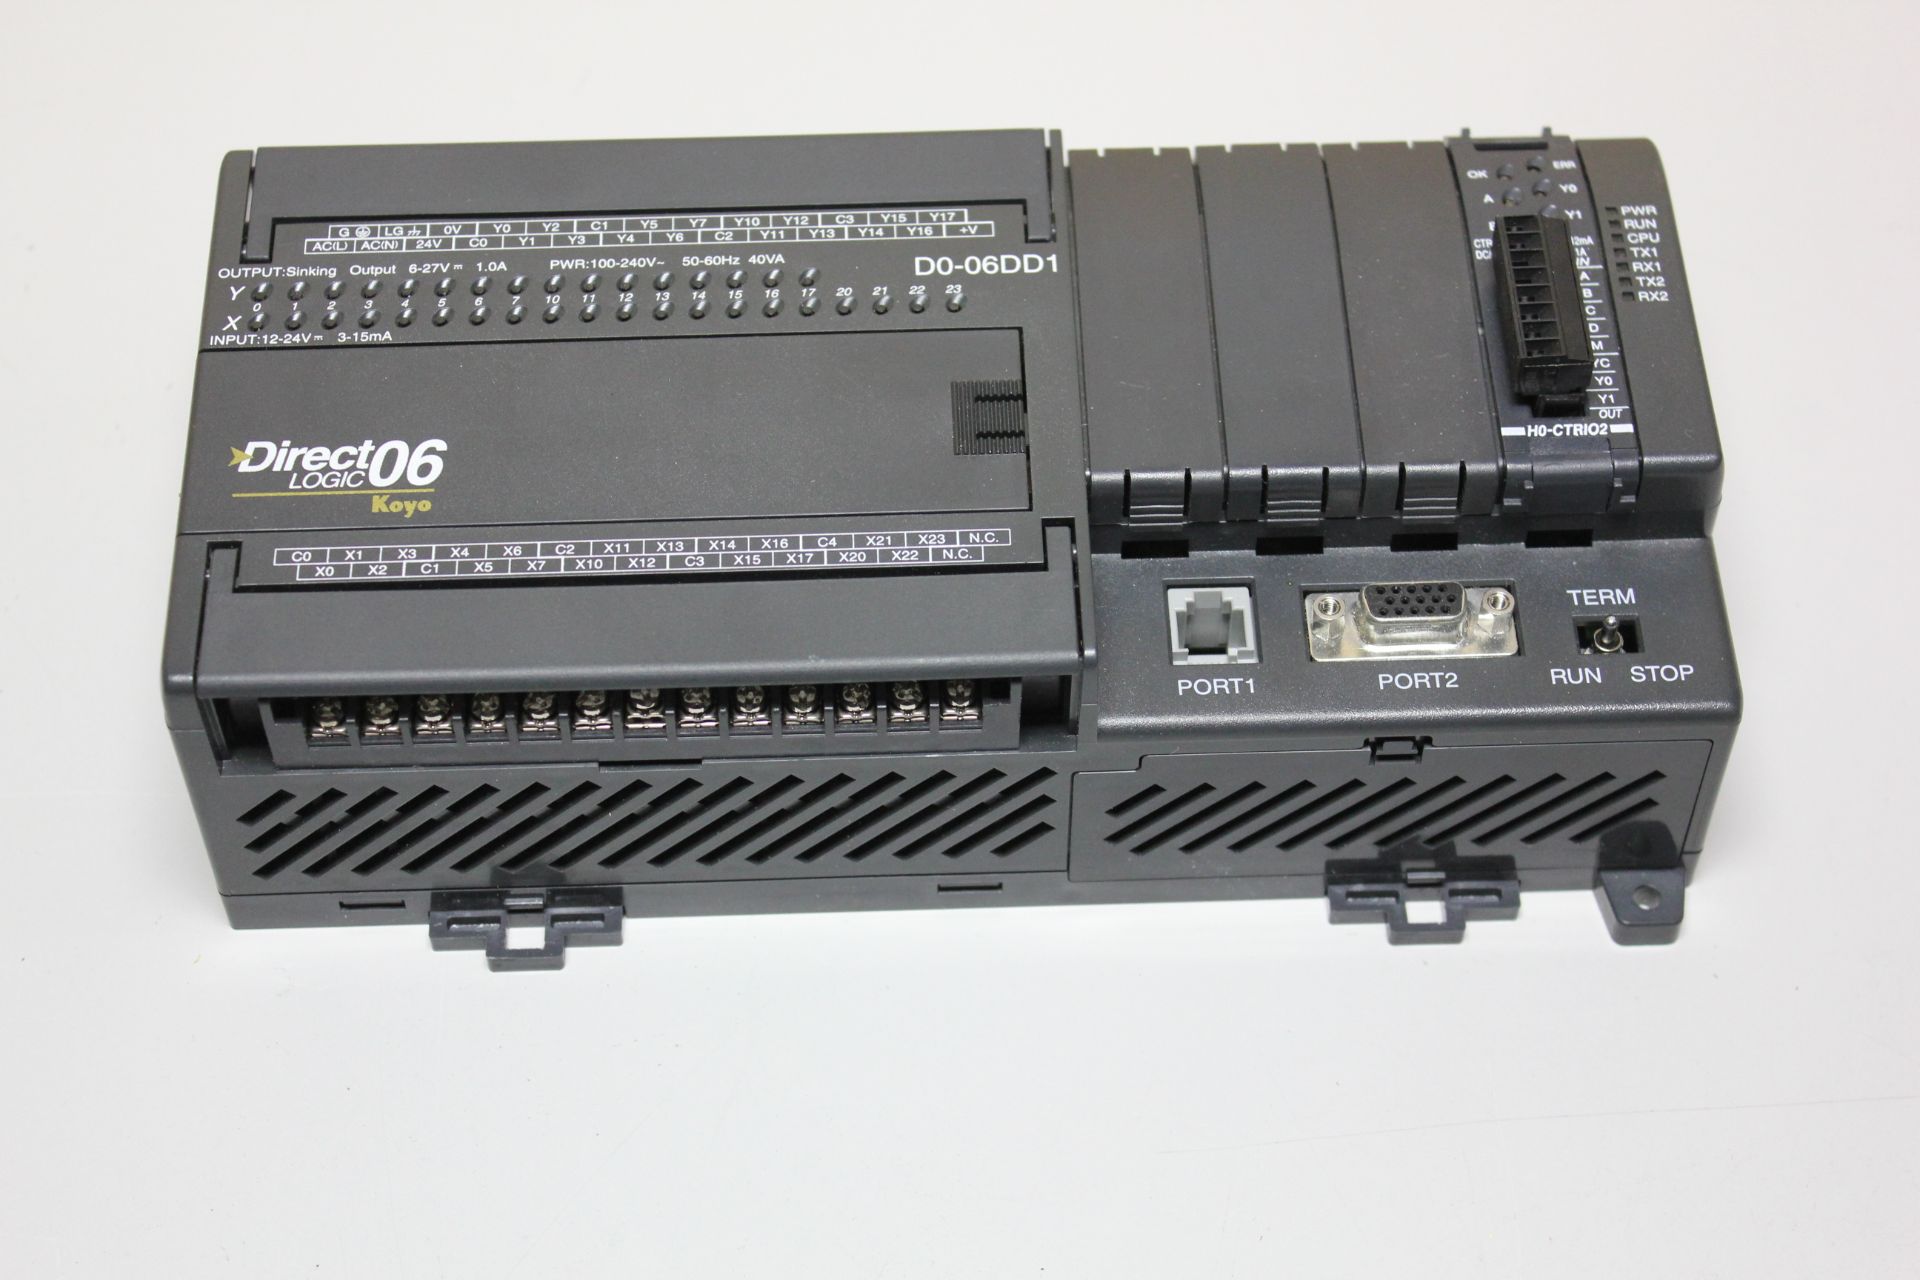 KOYO DIRECT LOGIC 06 PLC CPU CONTROLLER WITH HIGH SPEED COUNTER